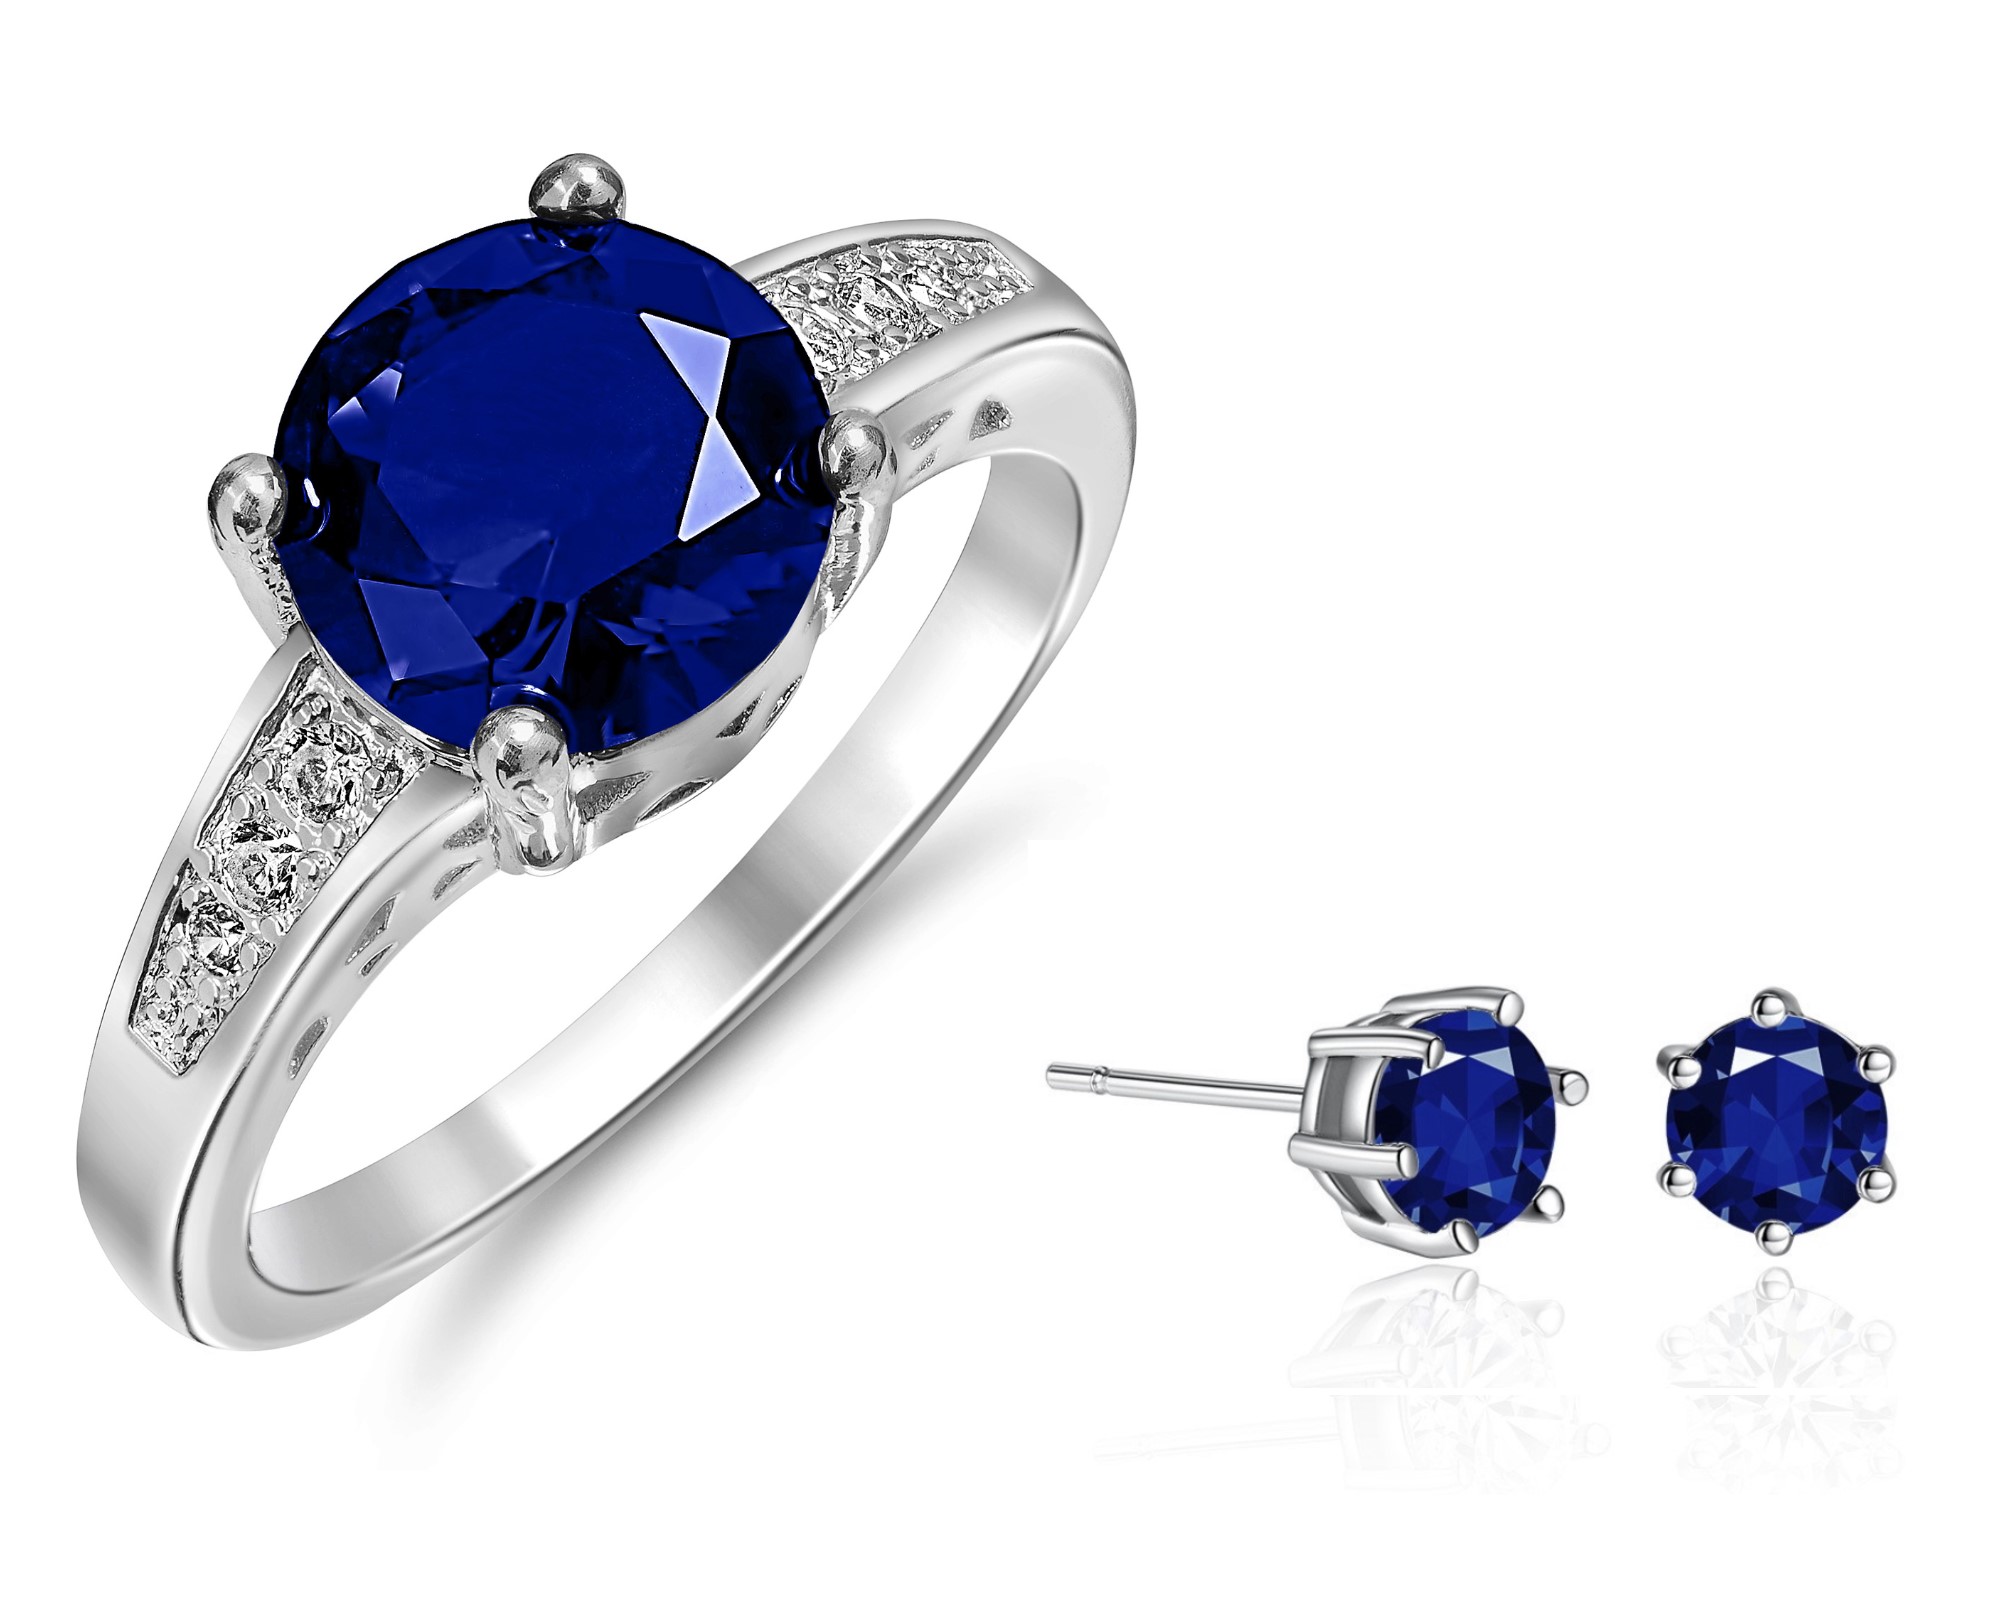 20 pcs - Brilliant Cut Blue Cubic Zirconia Stud Earrings and Ring Set - Random Ring Size - Total 10 Sets|GCJ012+GCJ019-Blue-Random Ring Size|UK SELLER